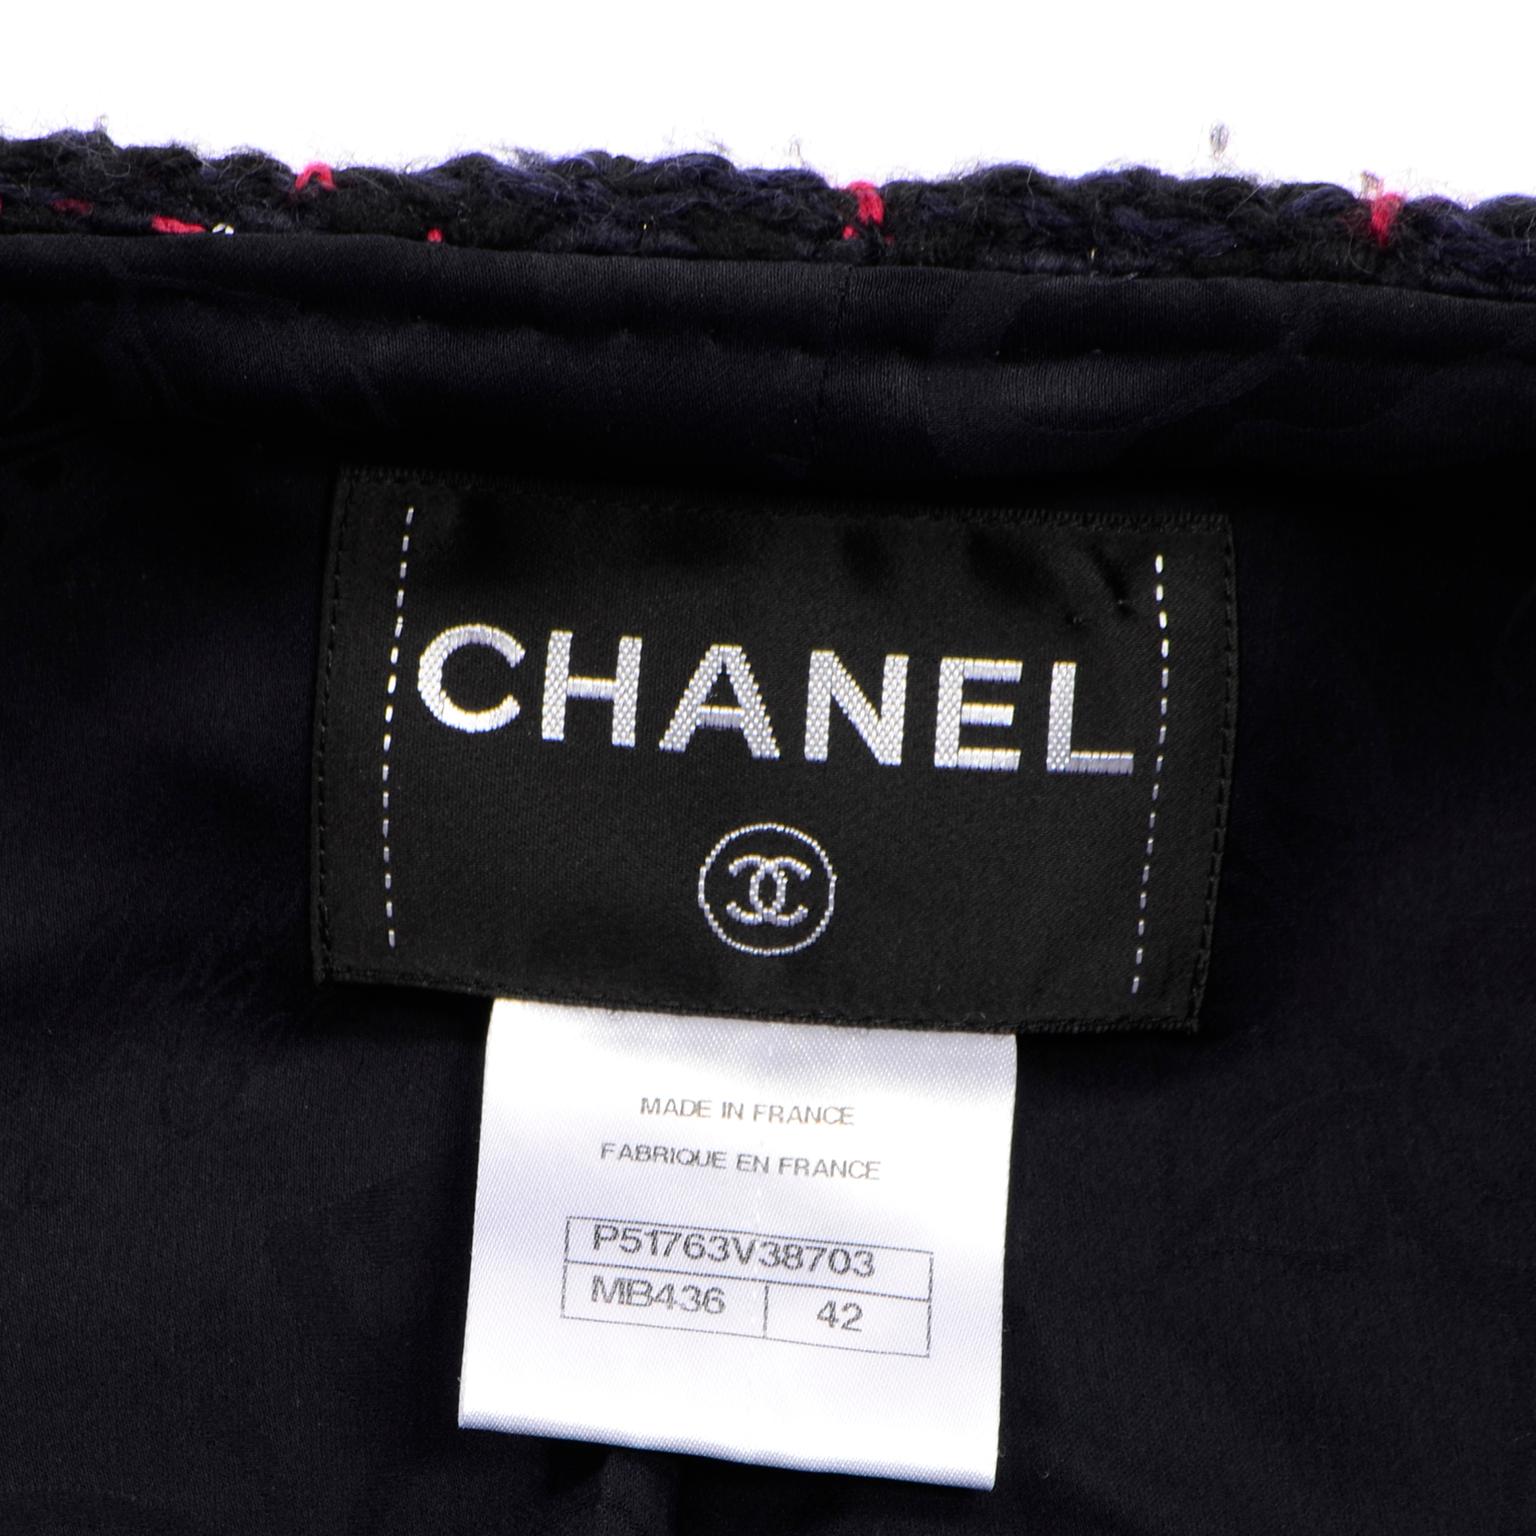 Chanel 2015 Paris Salzburg Collection $14250 Tweed Documented Runway Jacket 11